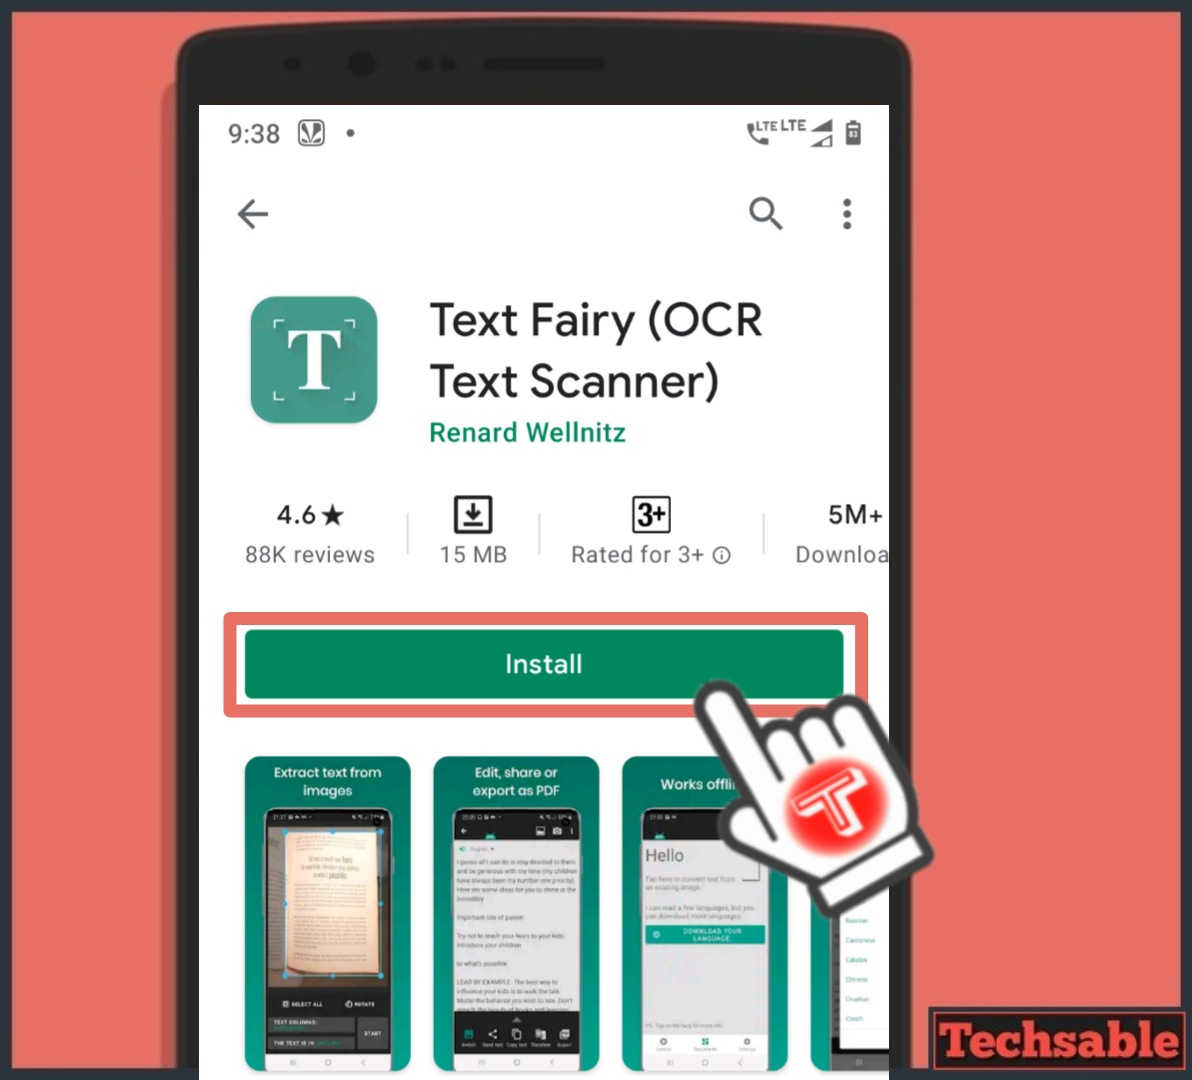 Text fairy OCR text scanning App